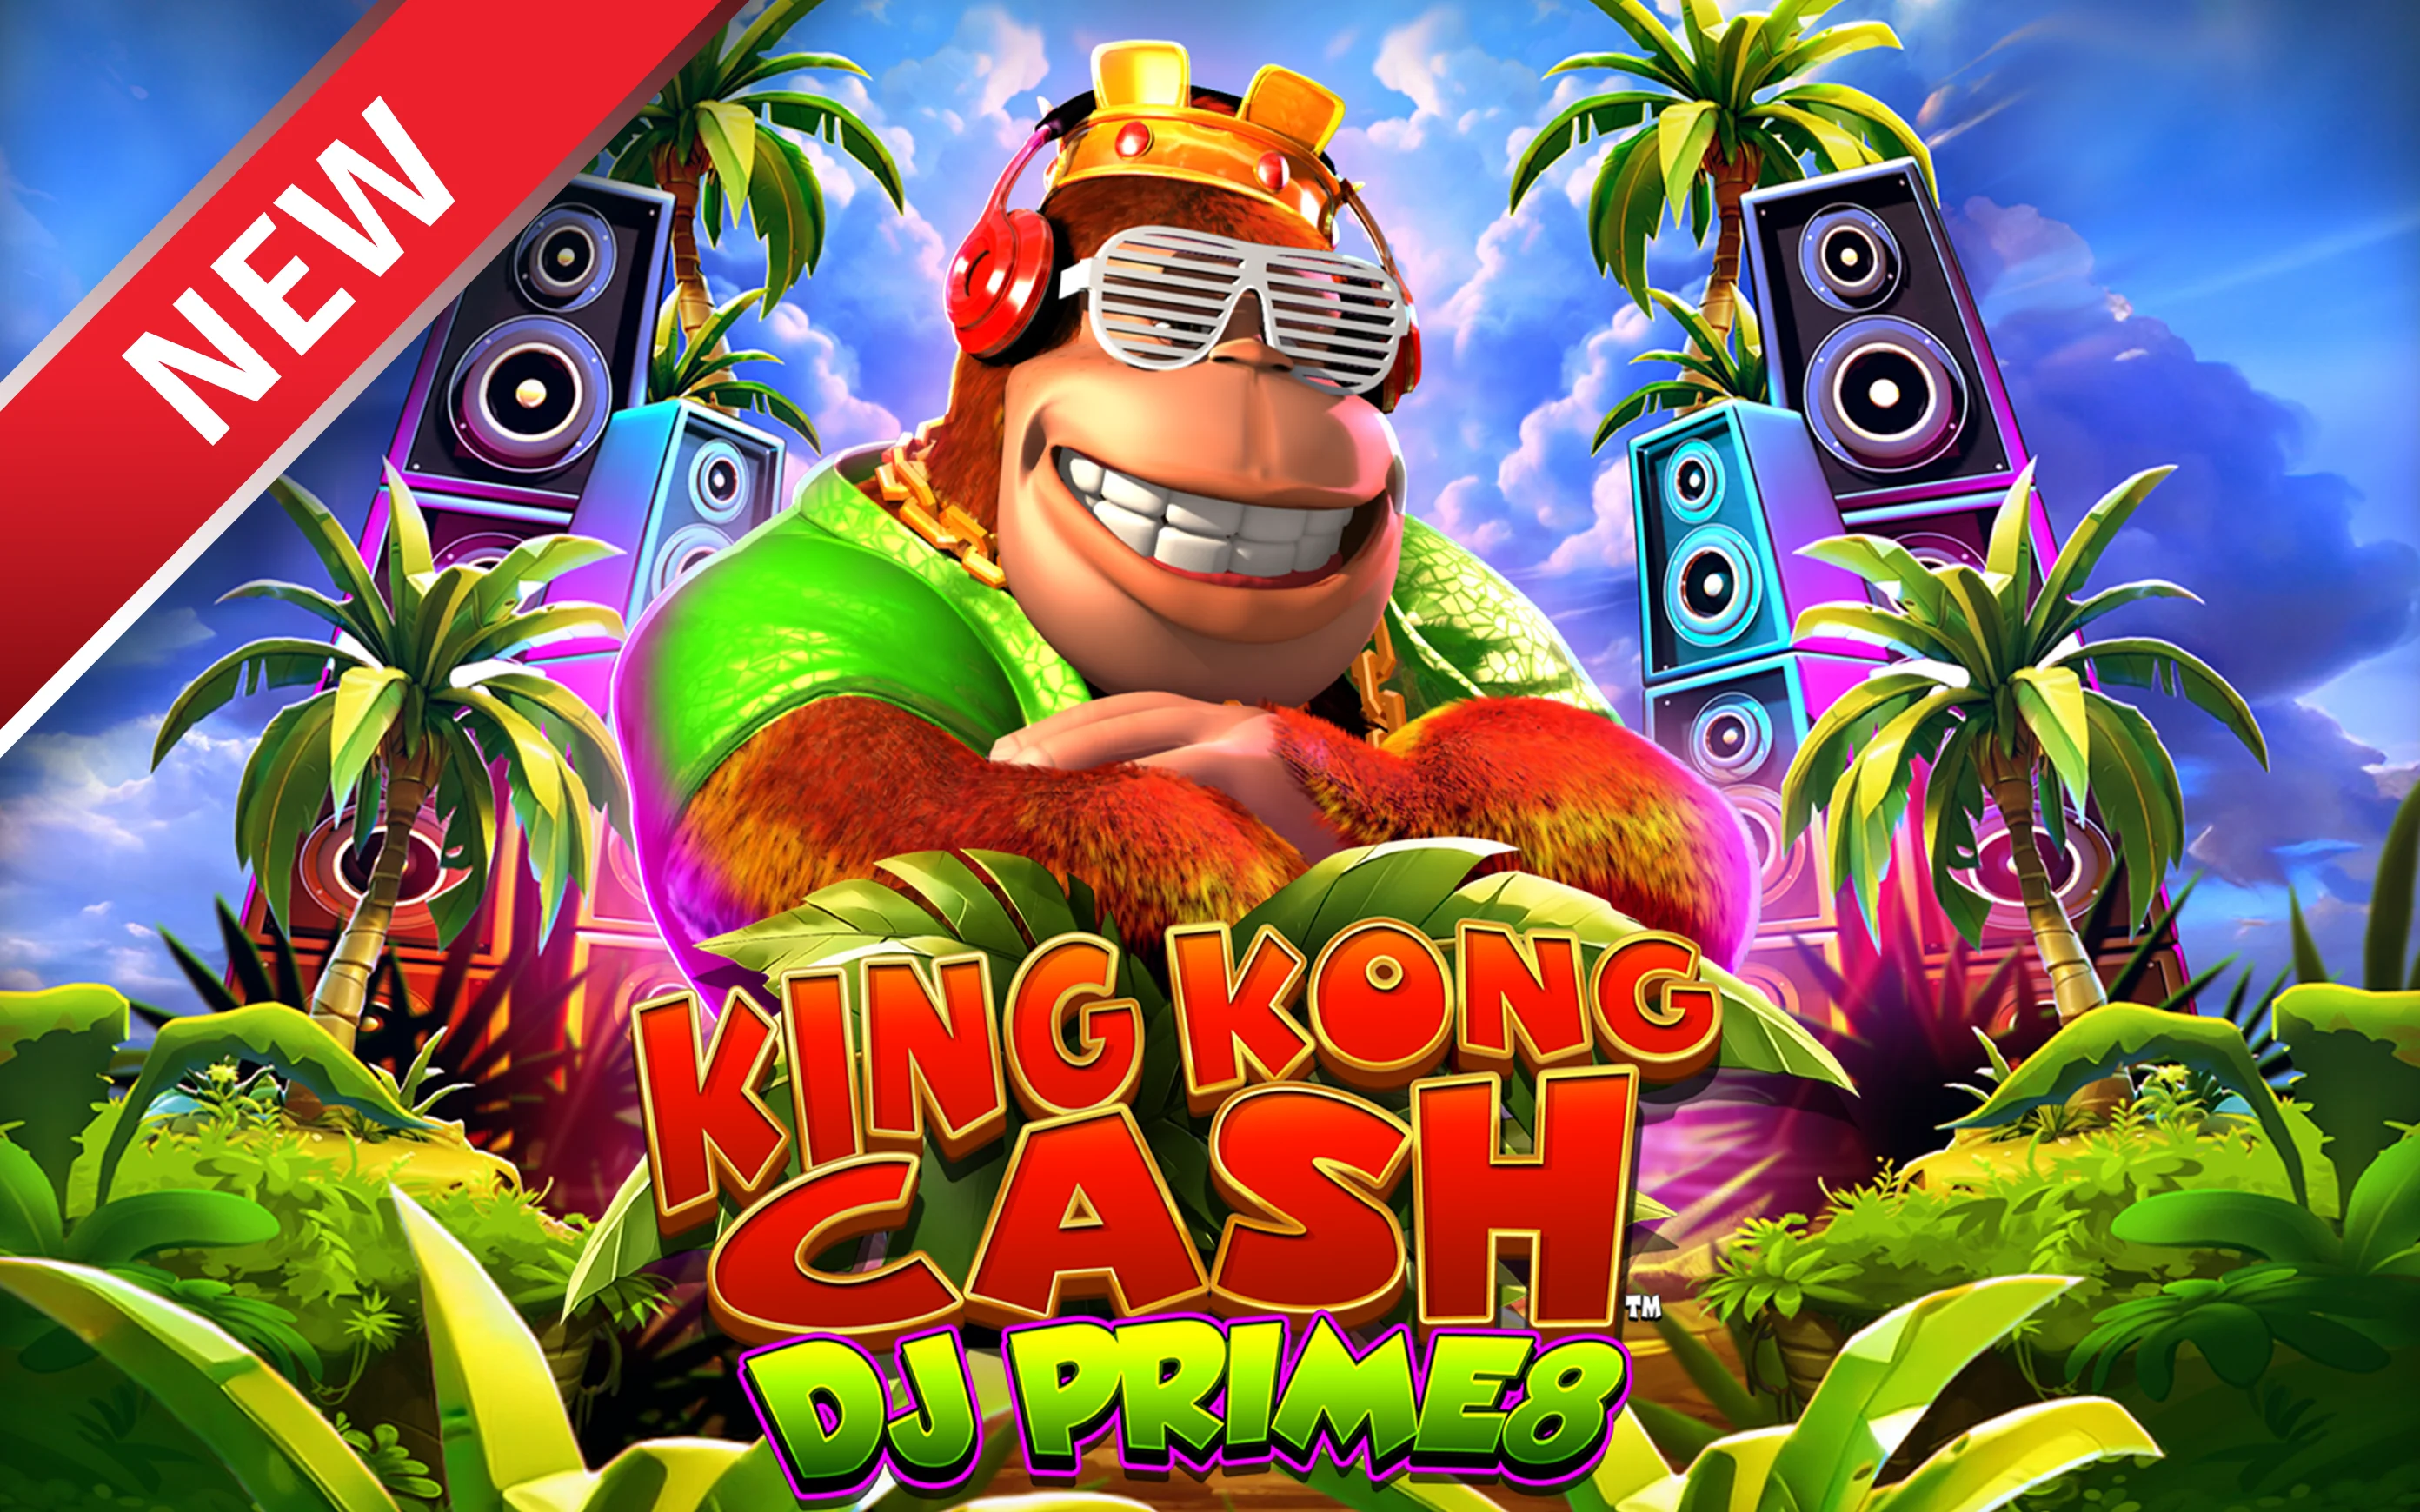 Spil King Kong Cash DJ Prime8 på Starcasino.be online kasino
